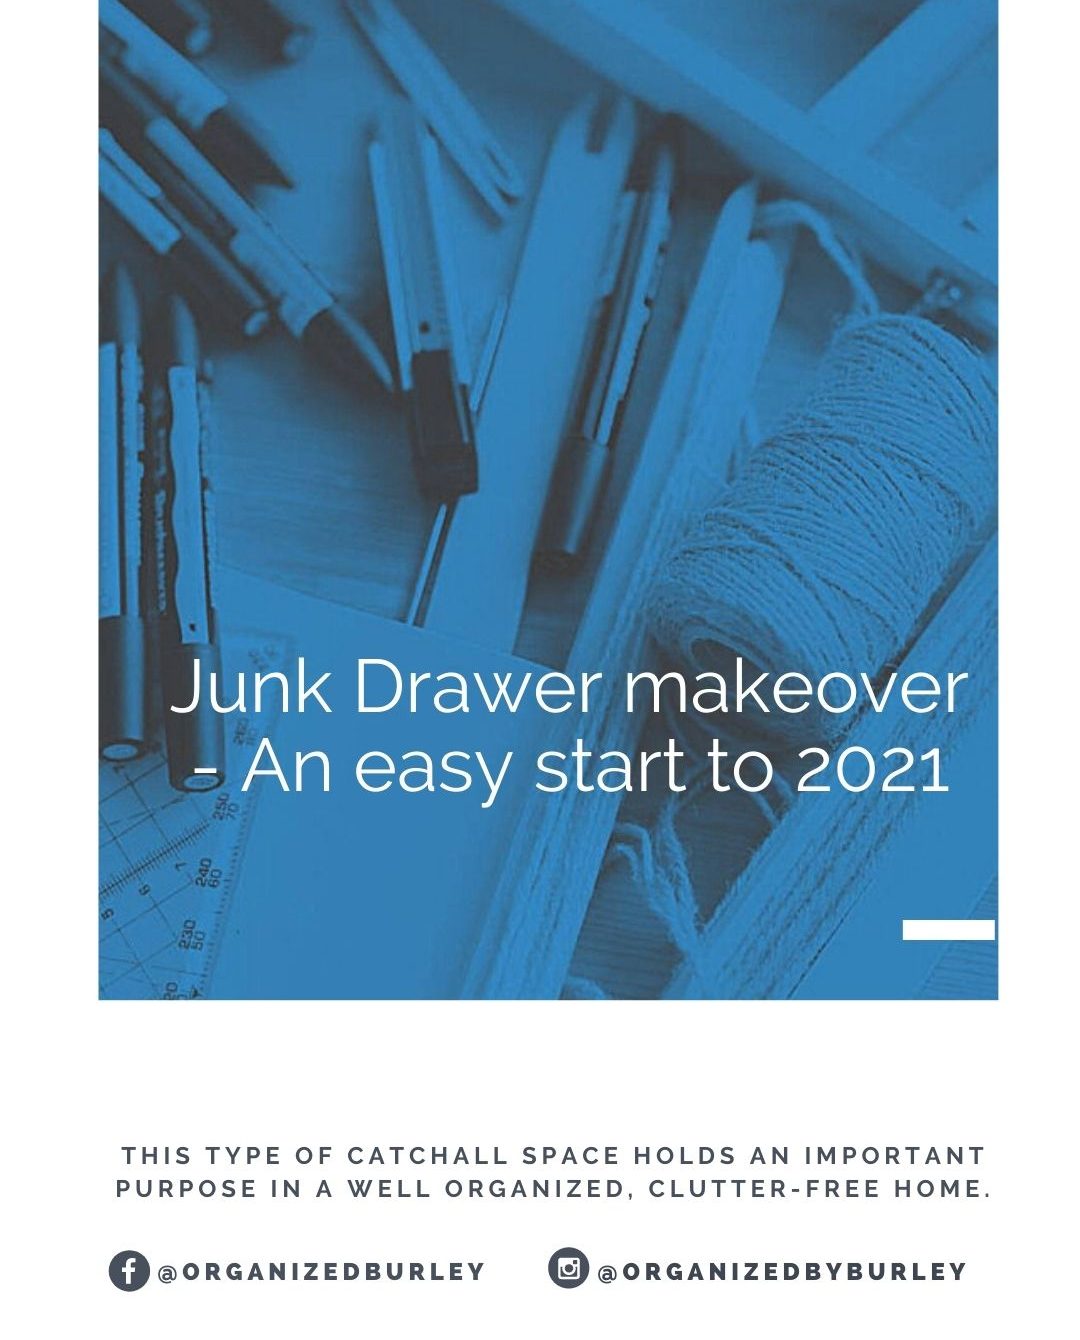 Junk Drawer makeover – An easy start